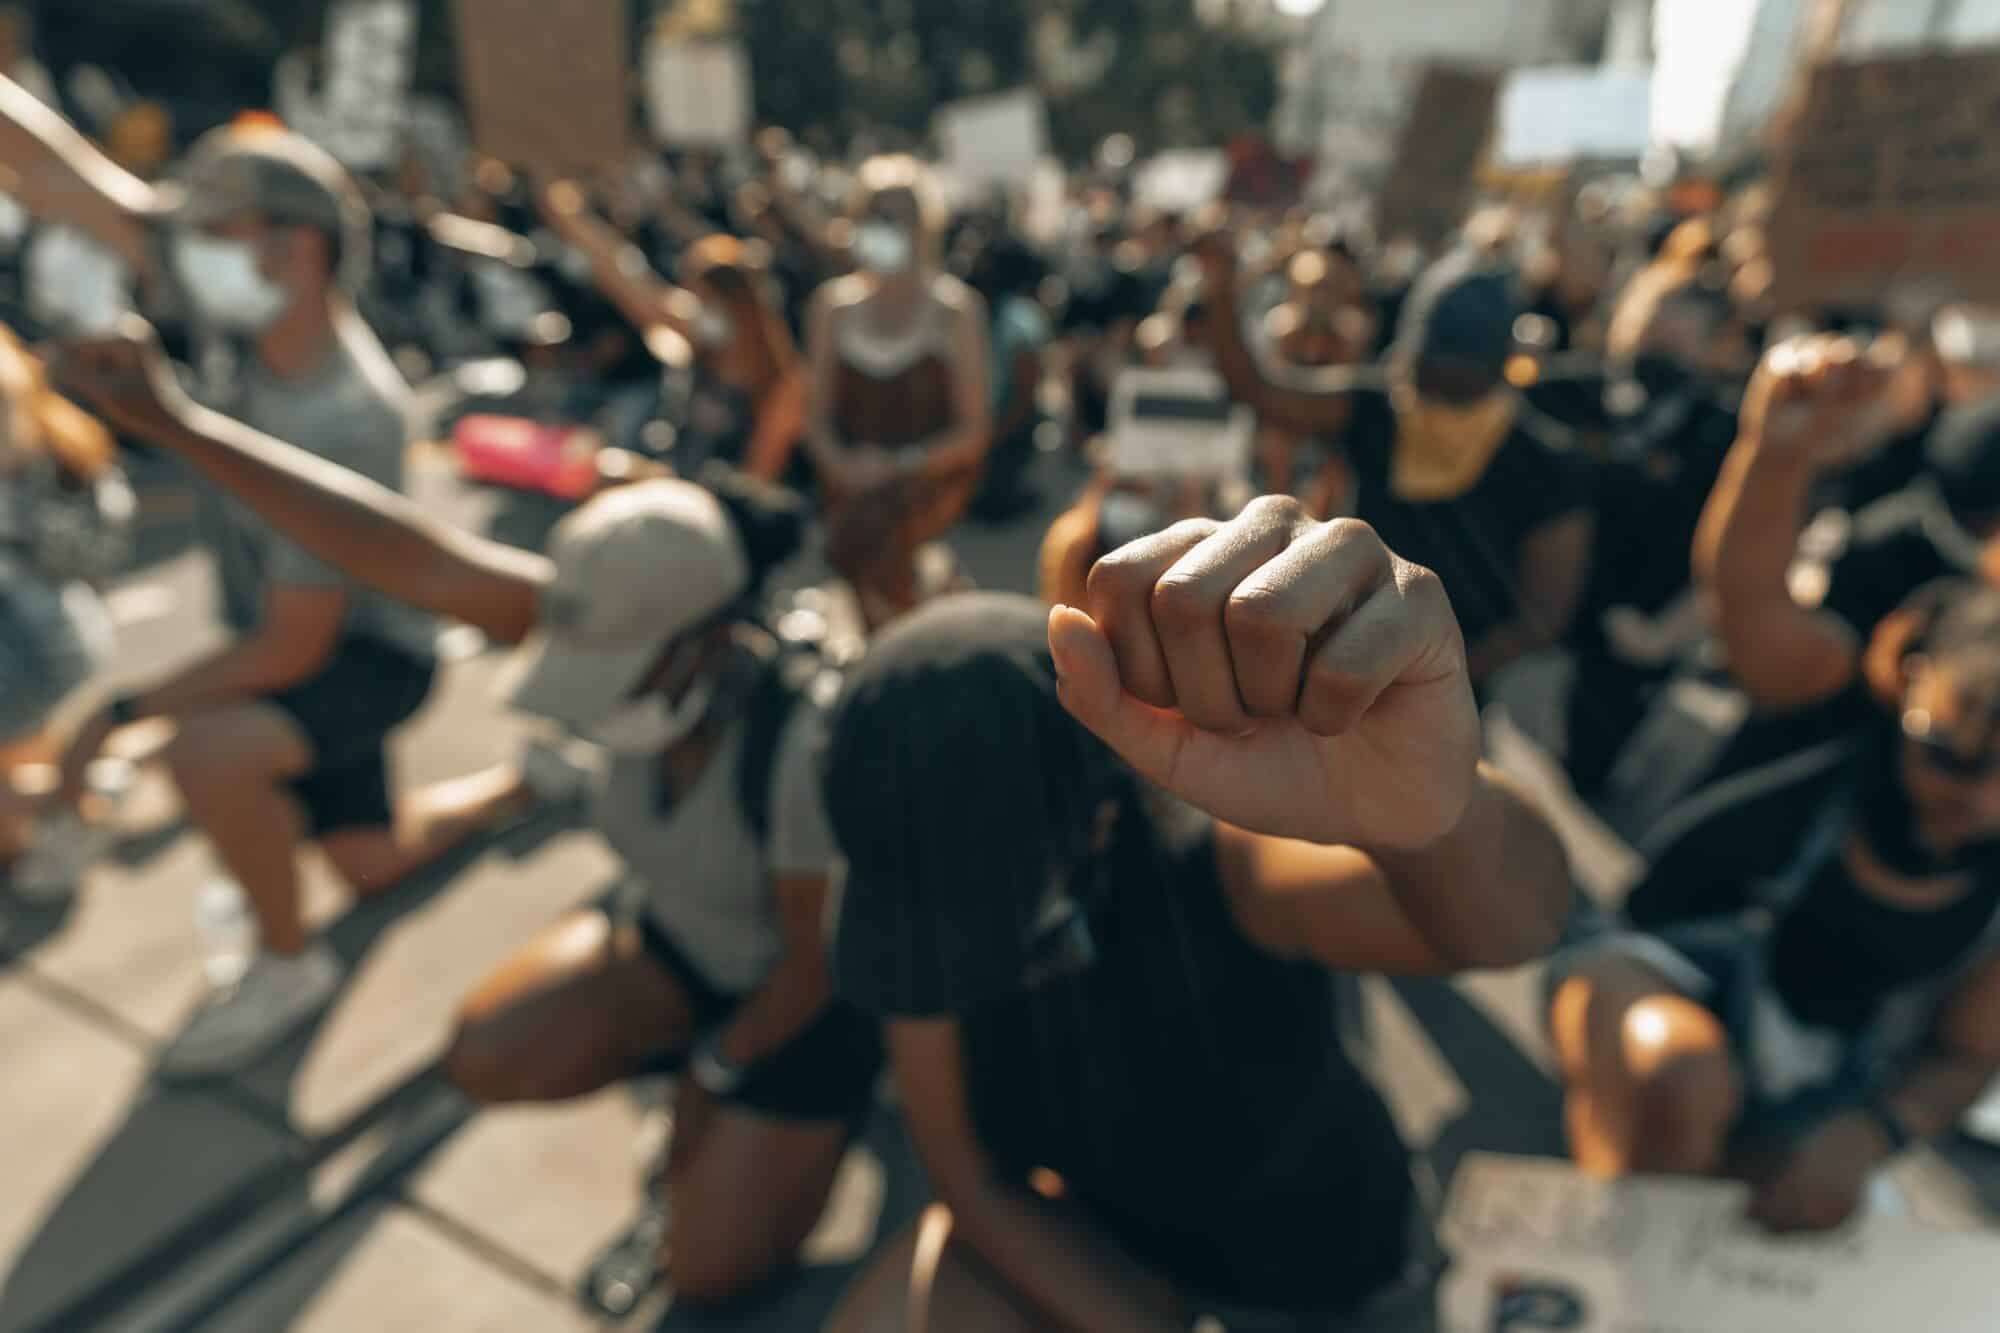 Black Lives Matter protestors kneel and raise fists in protest against police violence.